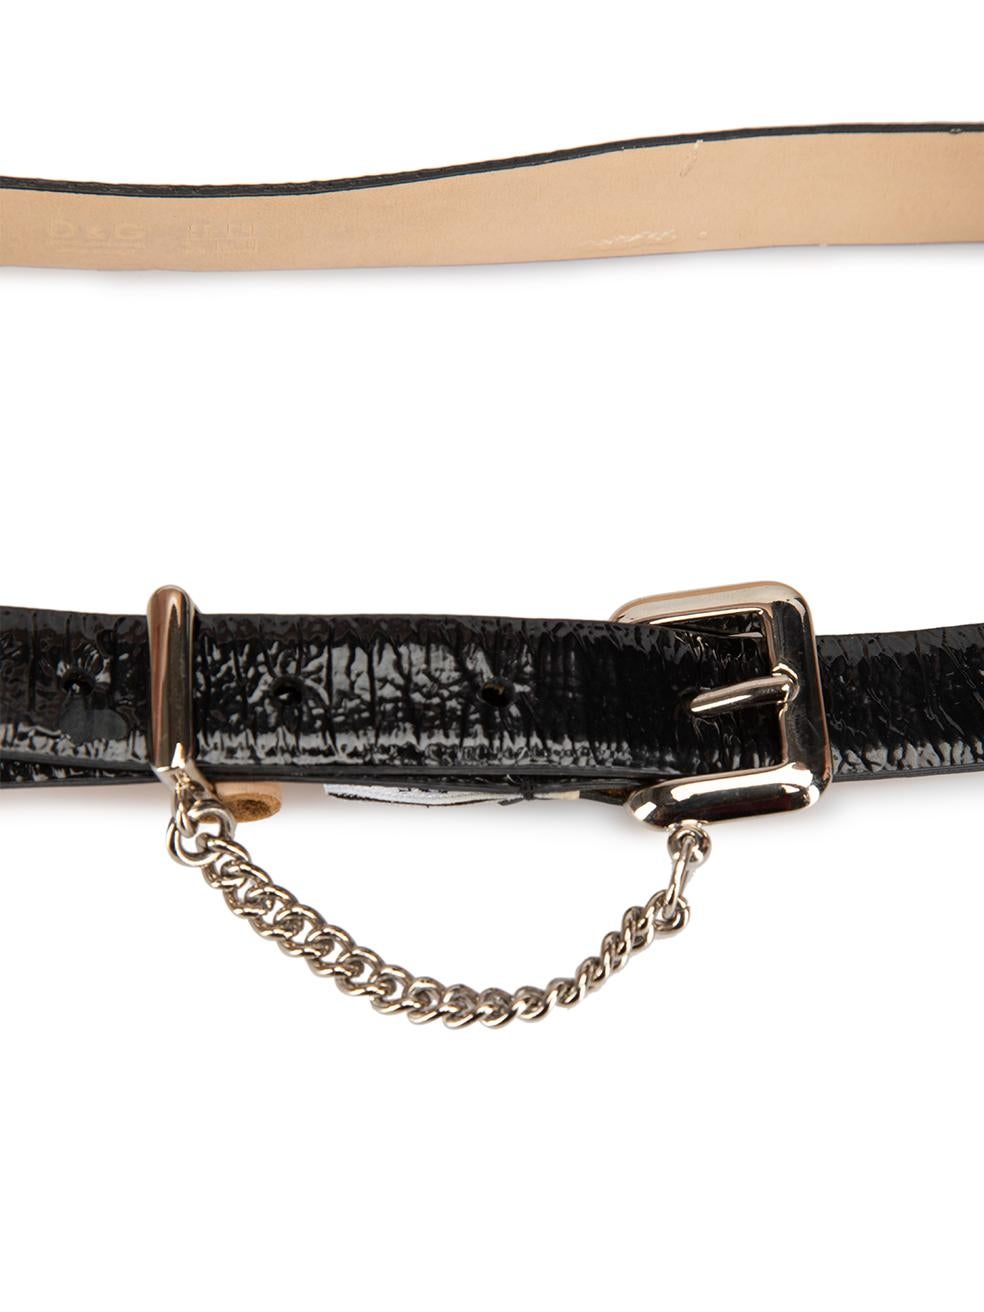 Dolce & Gabbana Women's D&G Black Patent Leather Chain Accent Belt 1